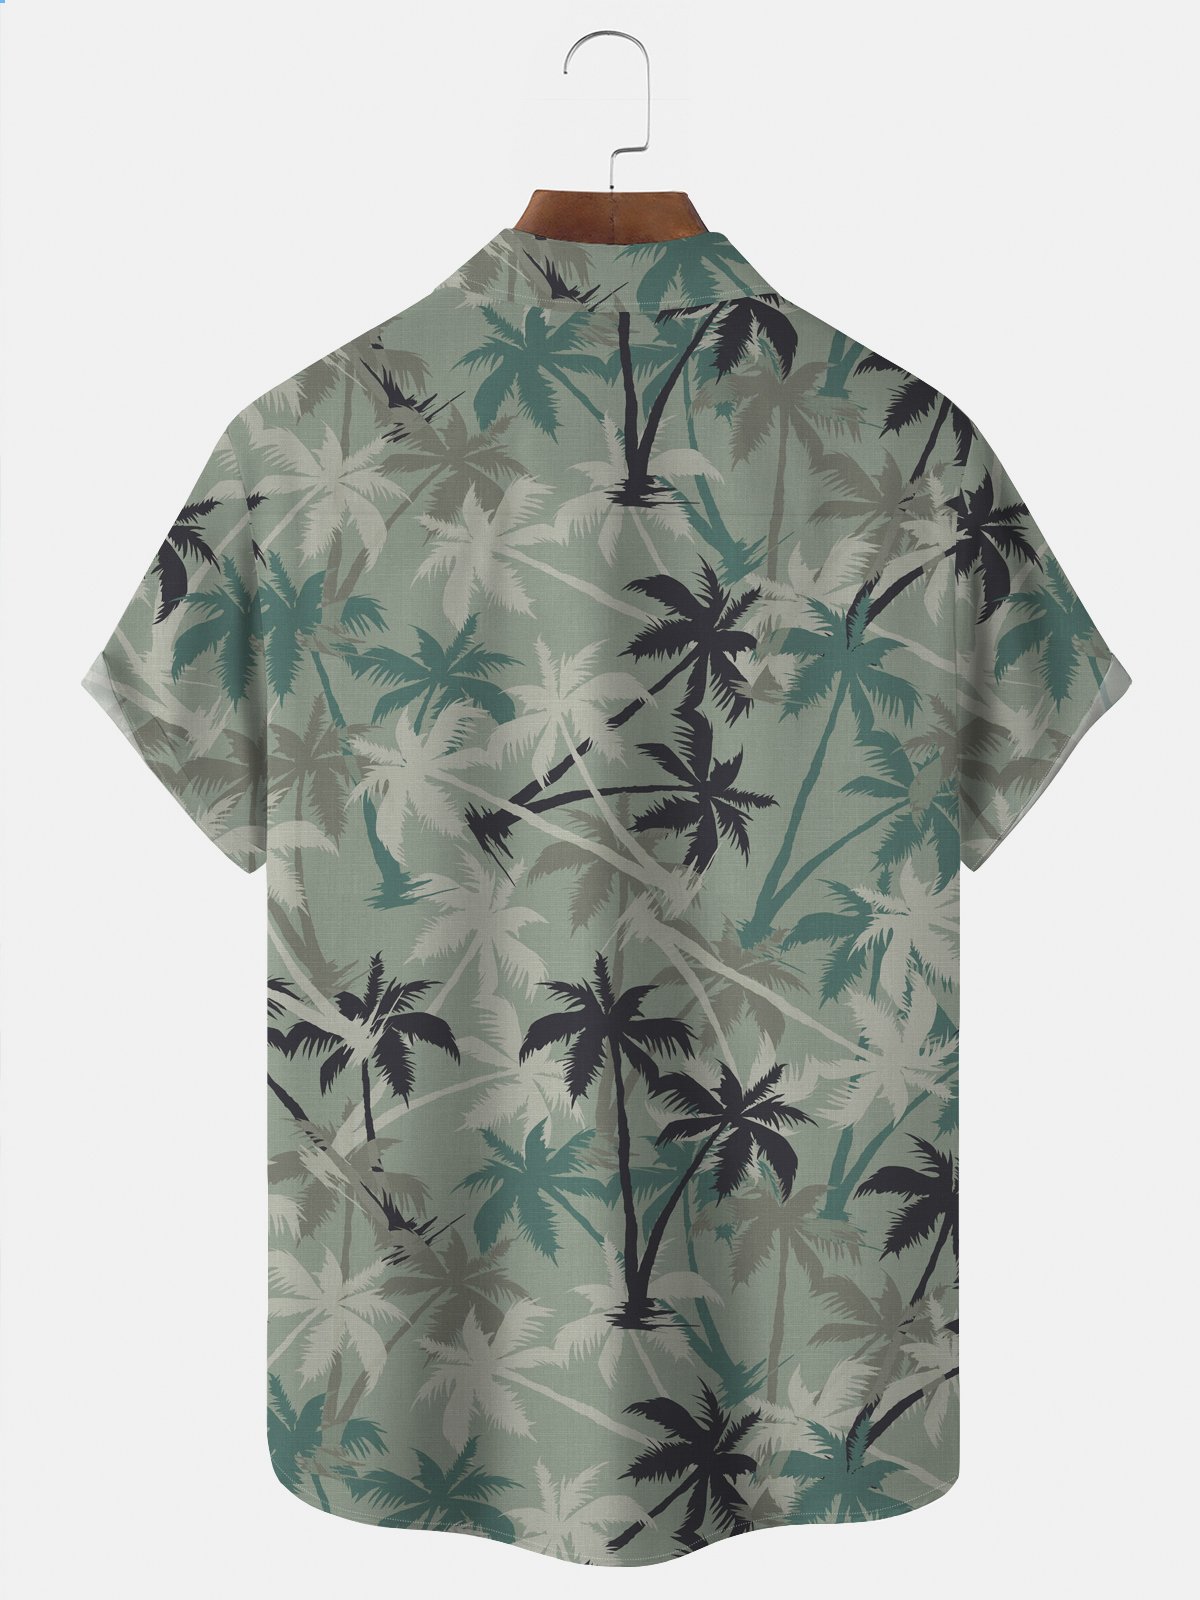 Royaura Natural Fiber Vintage Coconut Tree Print Holiday Beach Hawaii Oversized Aloha Comfortable Breathable Shirt